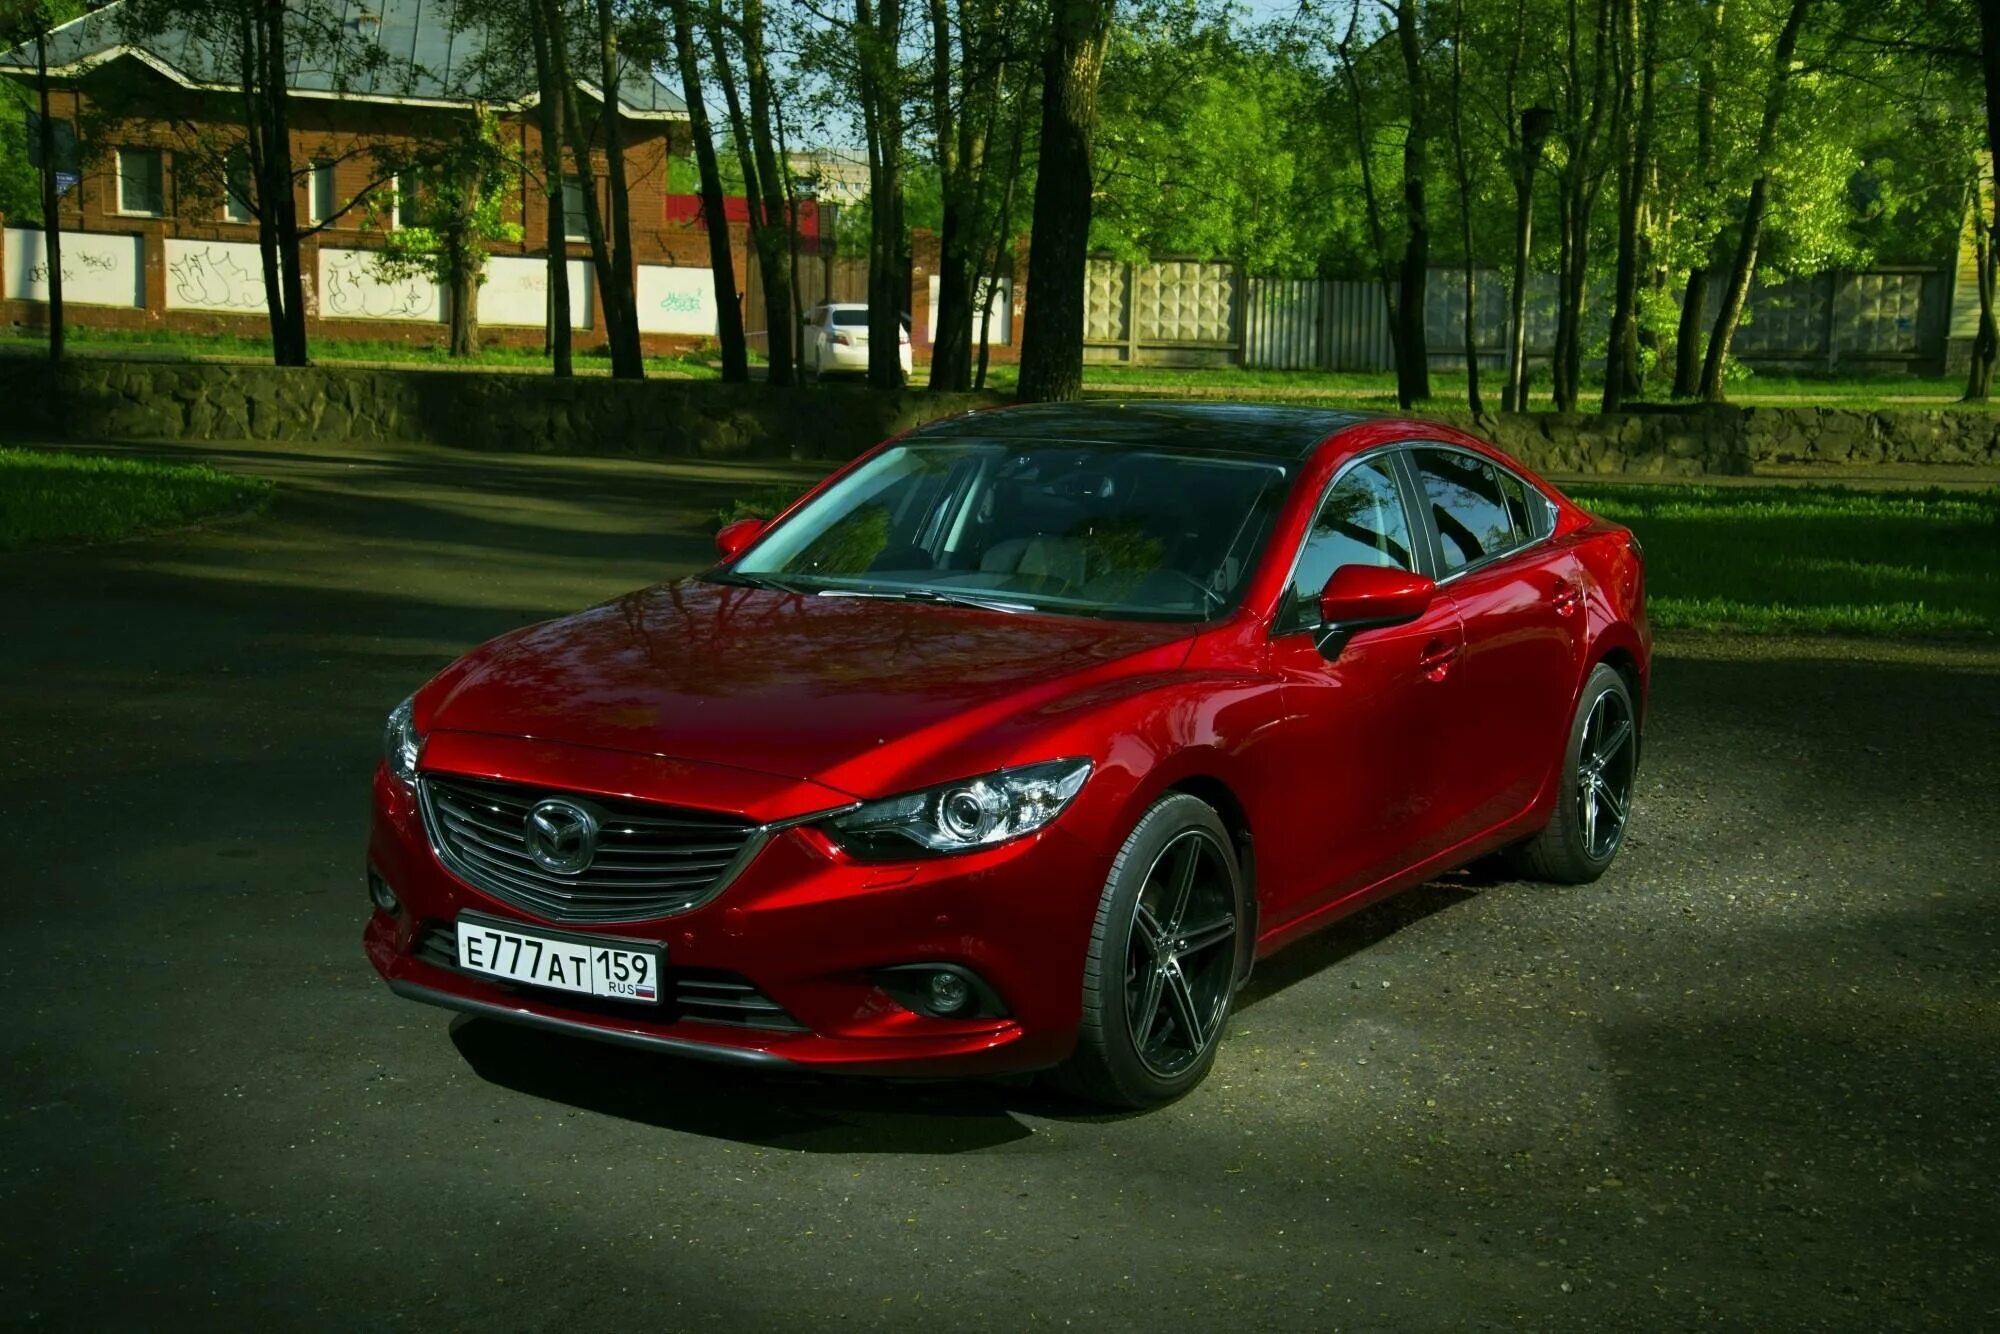 Mazda 6 Red. Мазда 6 2015 года красная. Мазда 6 красная новый кузов. Мазда 6 красная седан.